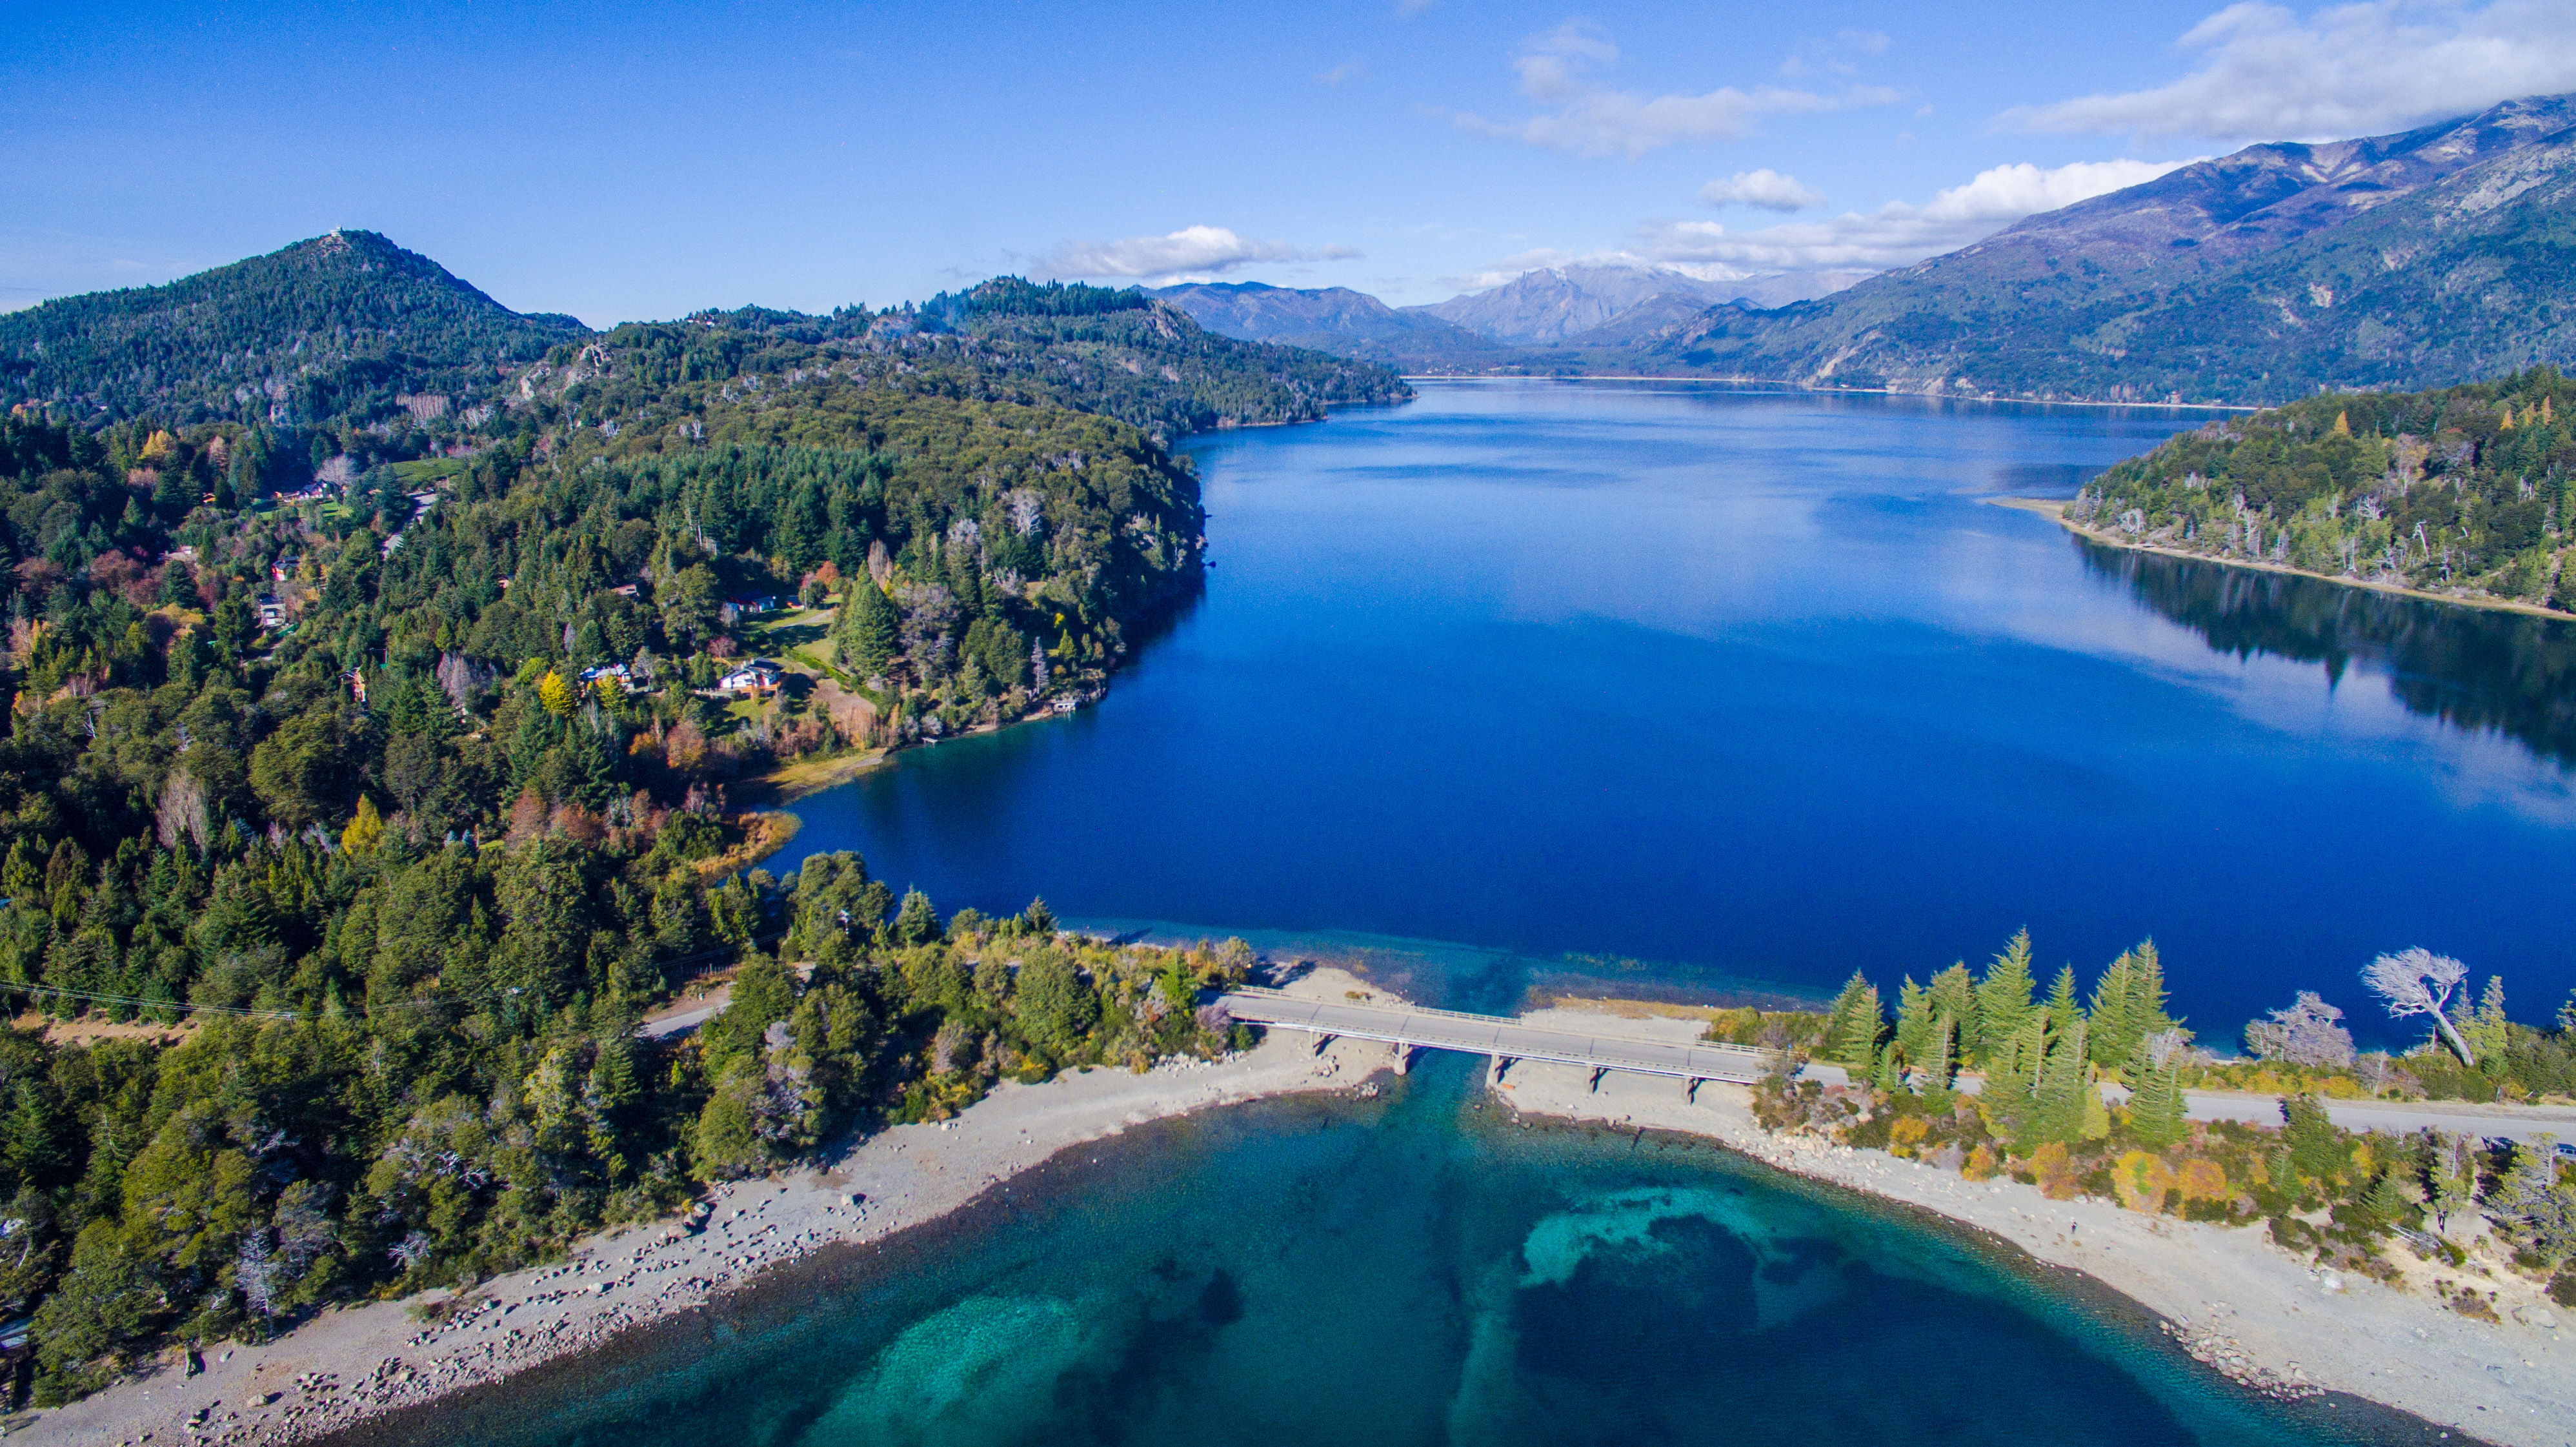 Bariloche espera un record de turistas para este verano - Diario Vivo